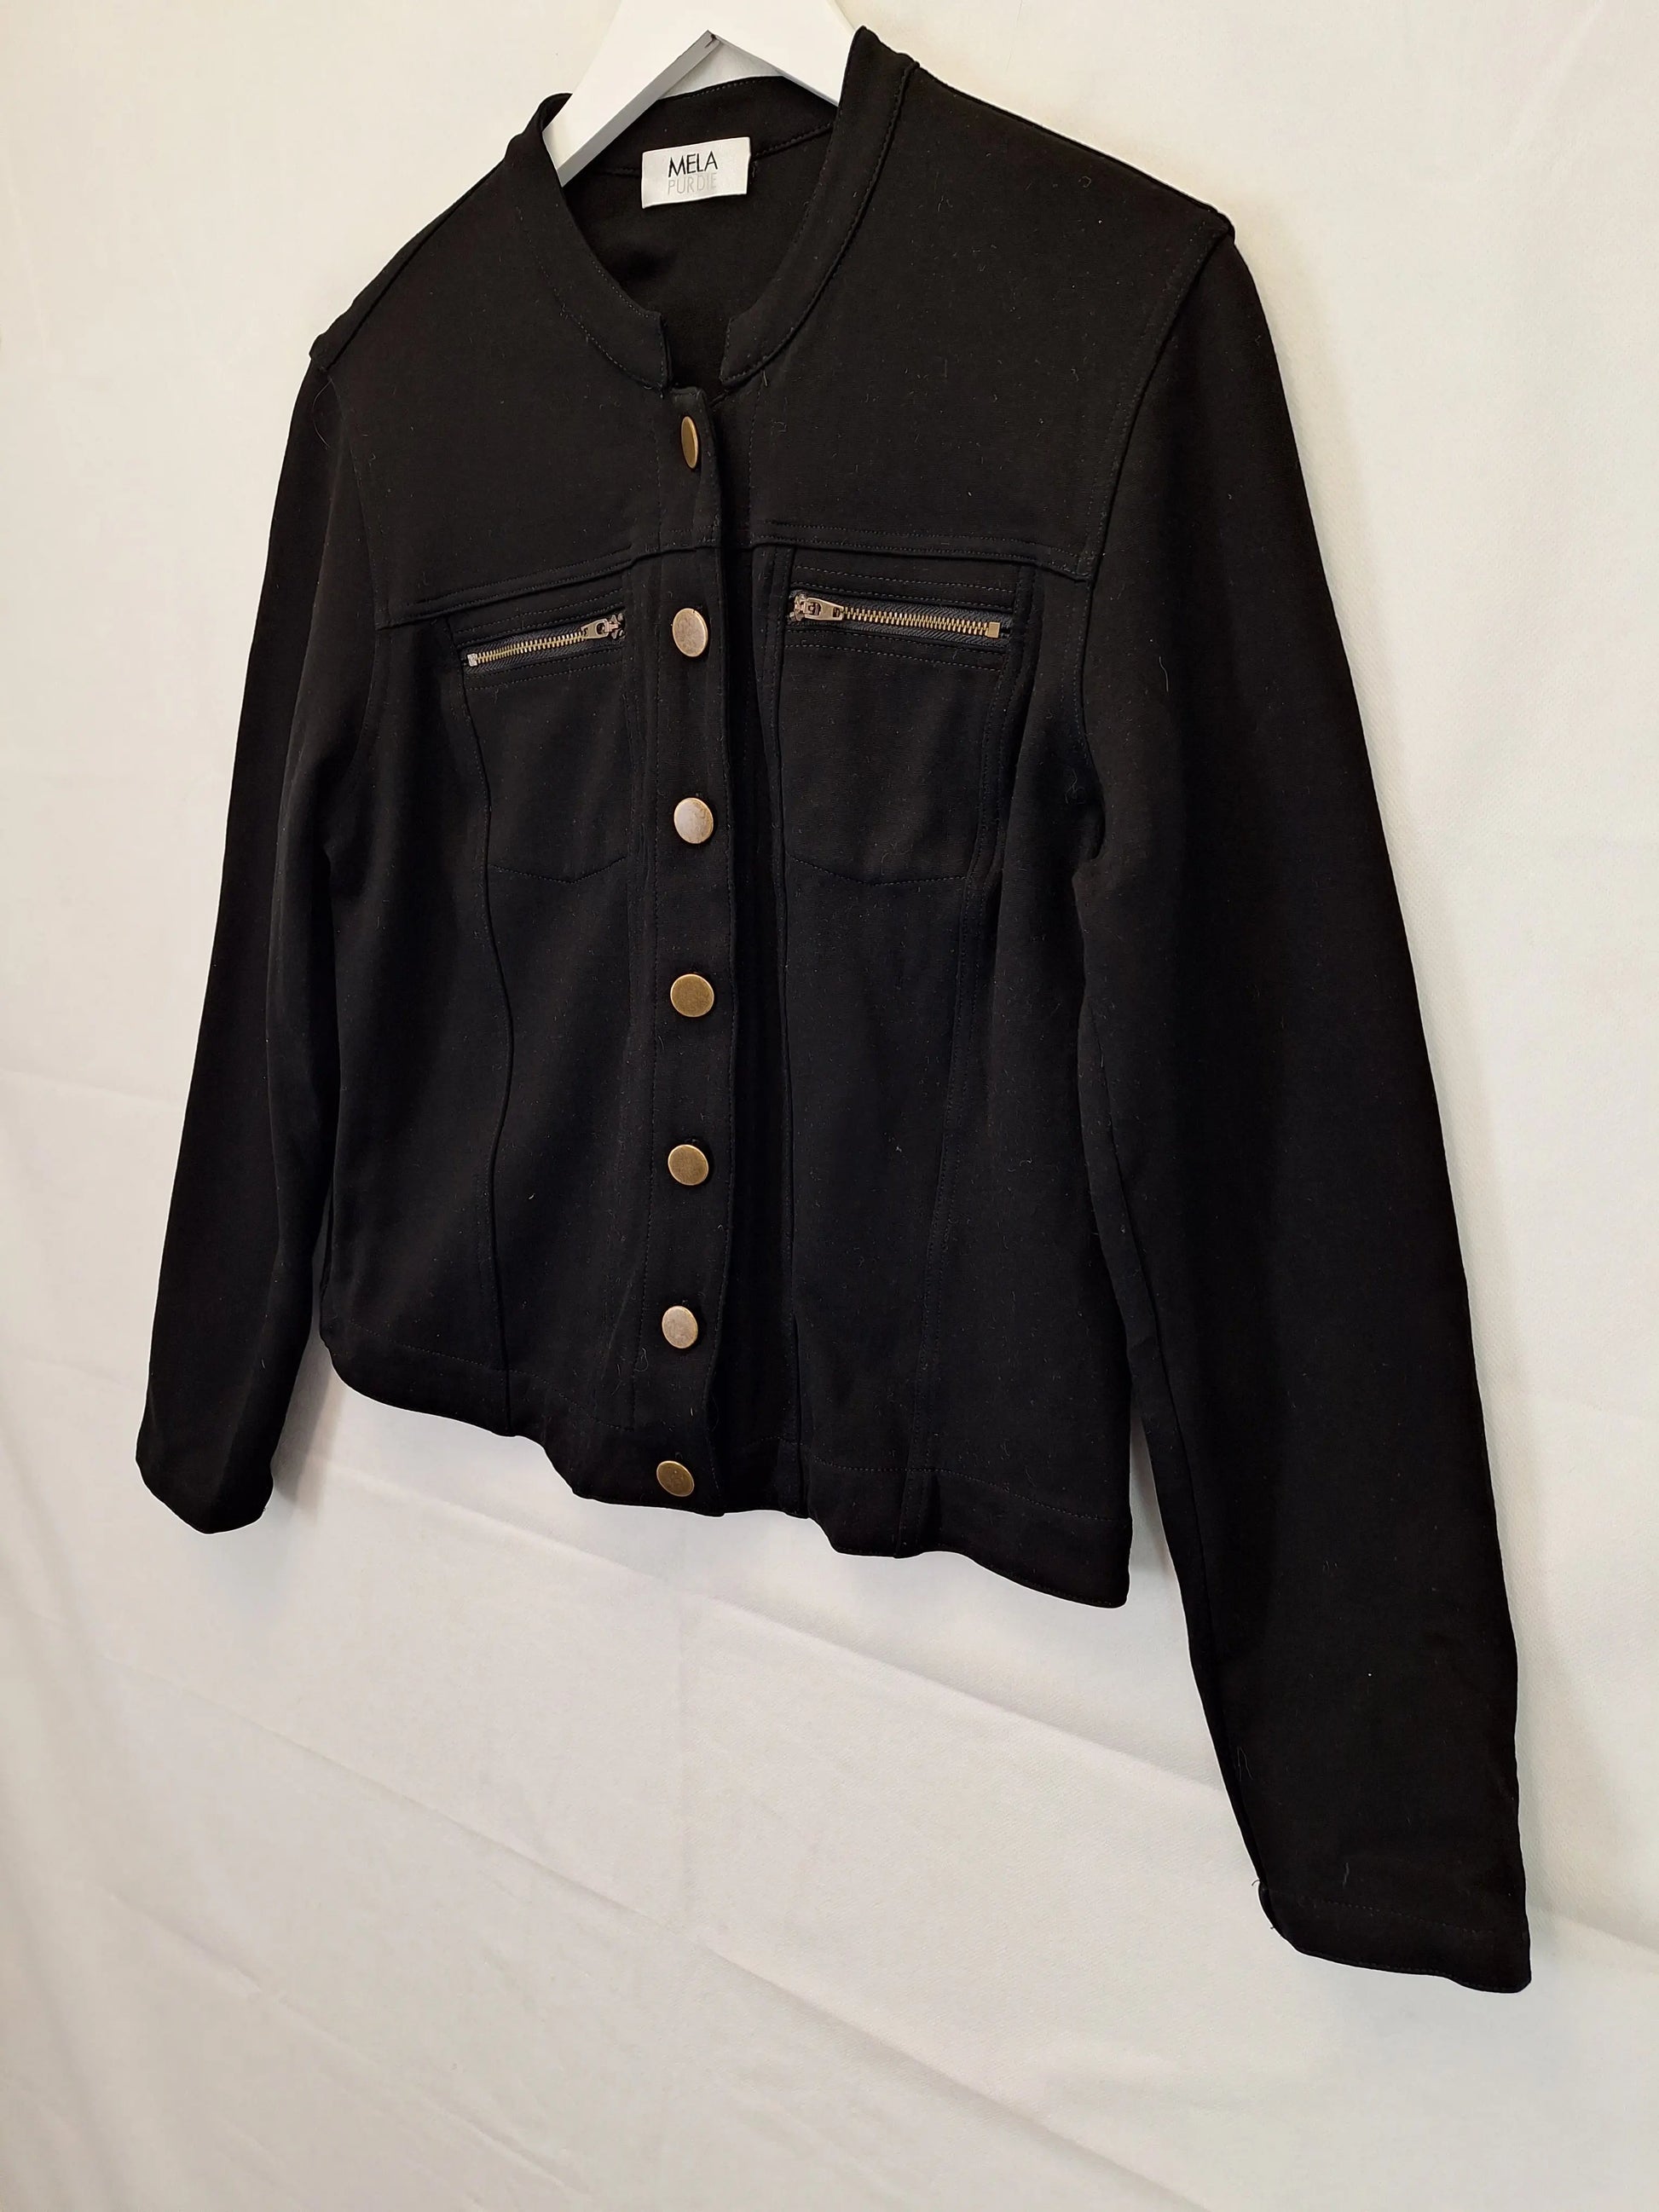 Mela Purdie Stretch Midnight Jacket Size 10 by SwapUp-Online Second Hand Store-Online Thrift Store